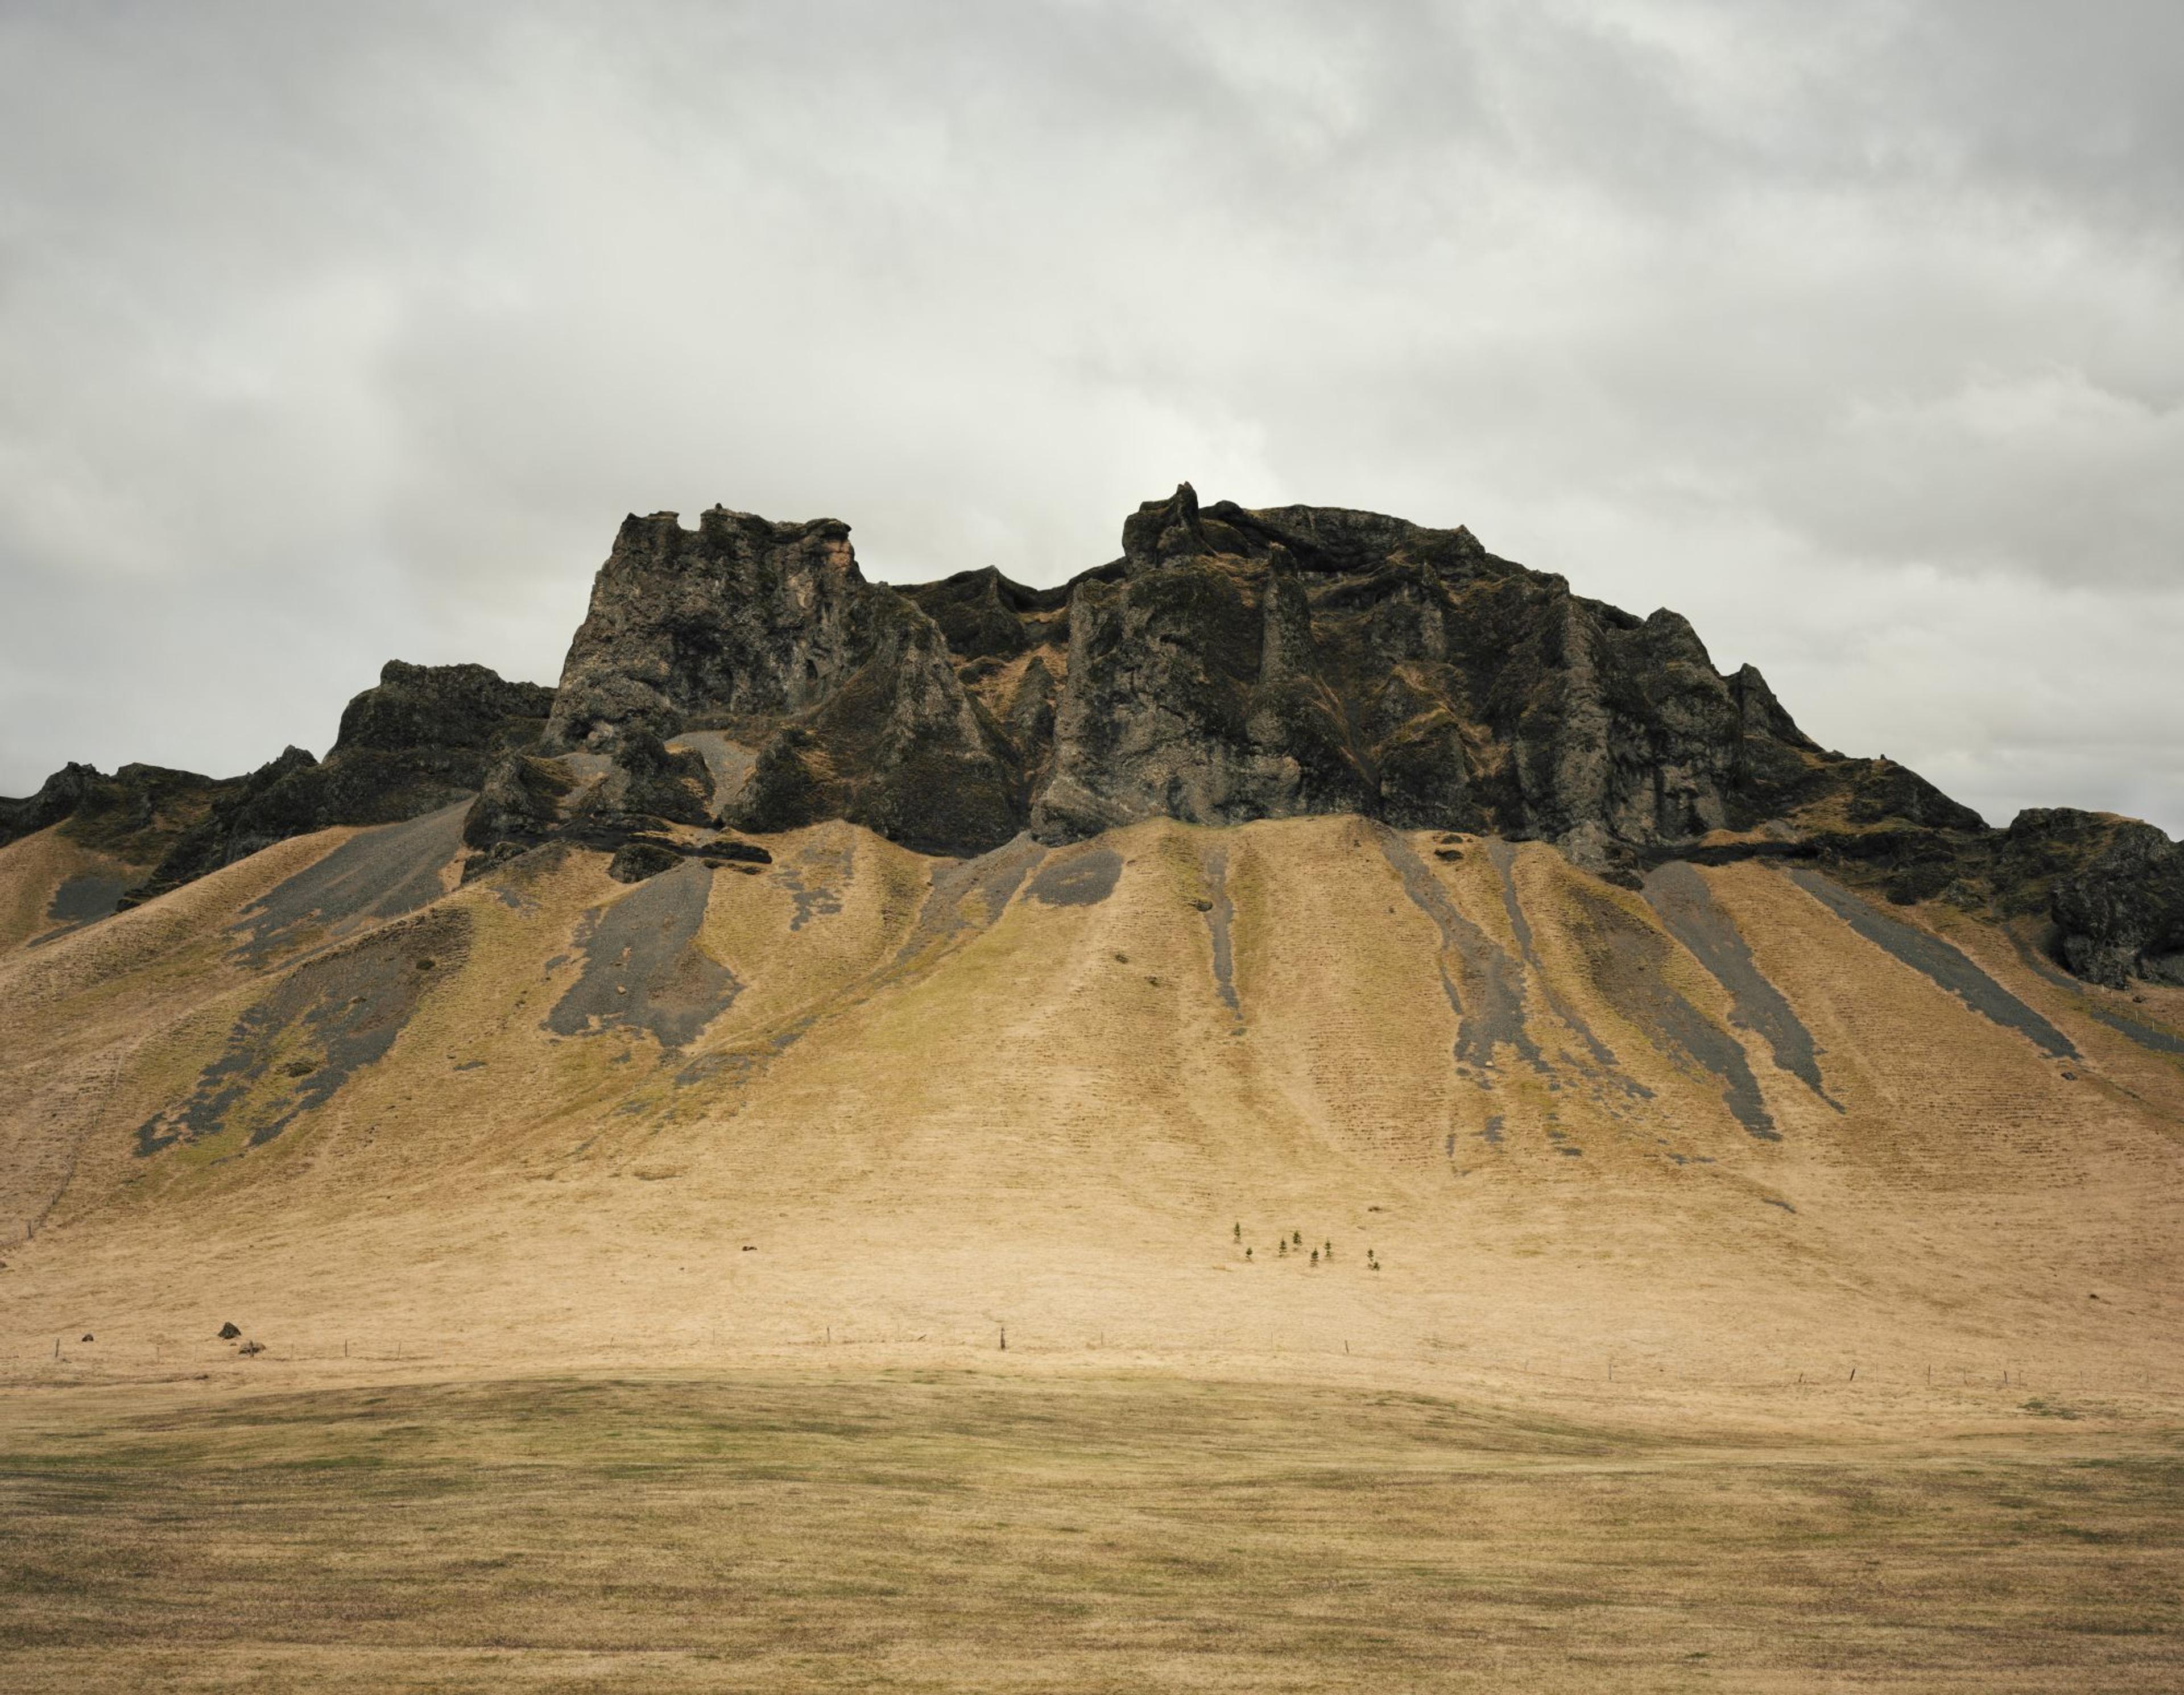 A photograph of a cloudy, mountainous desert landscape